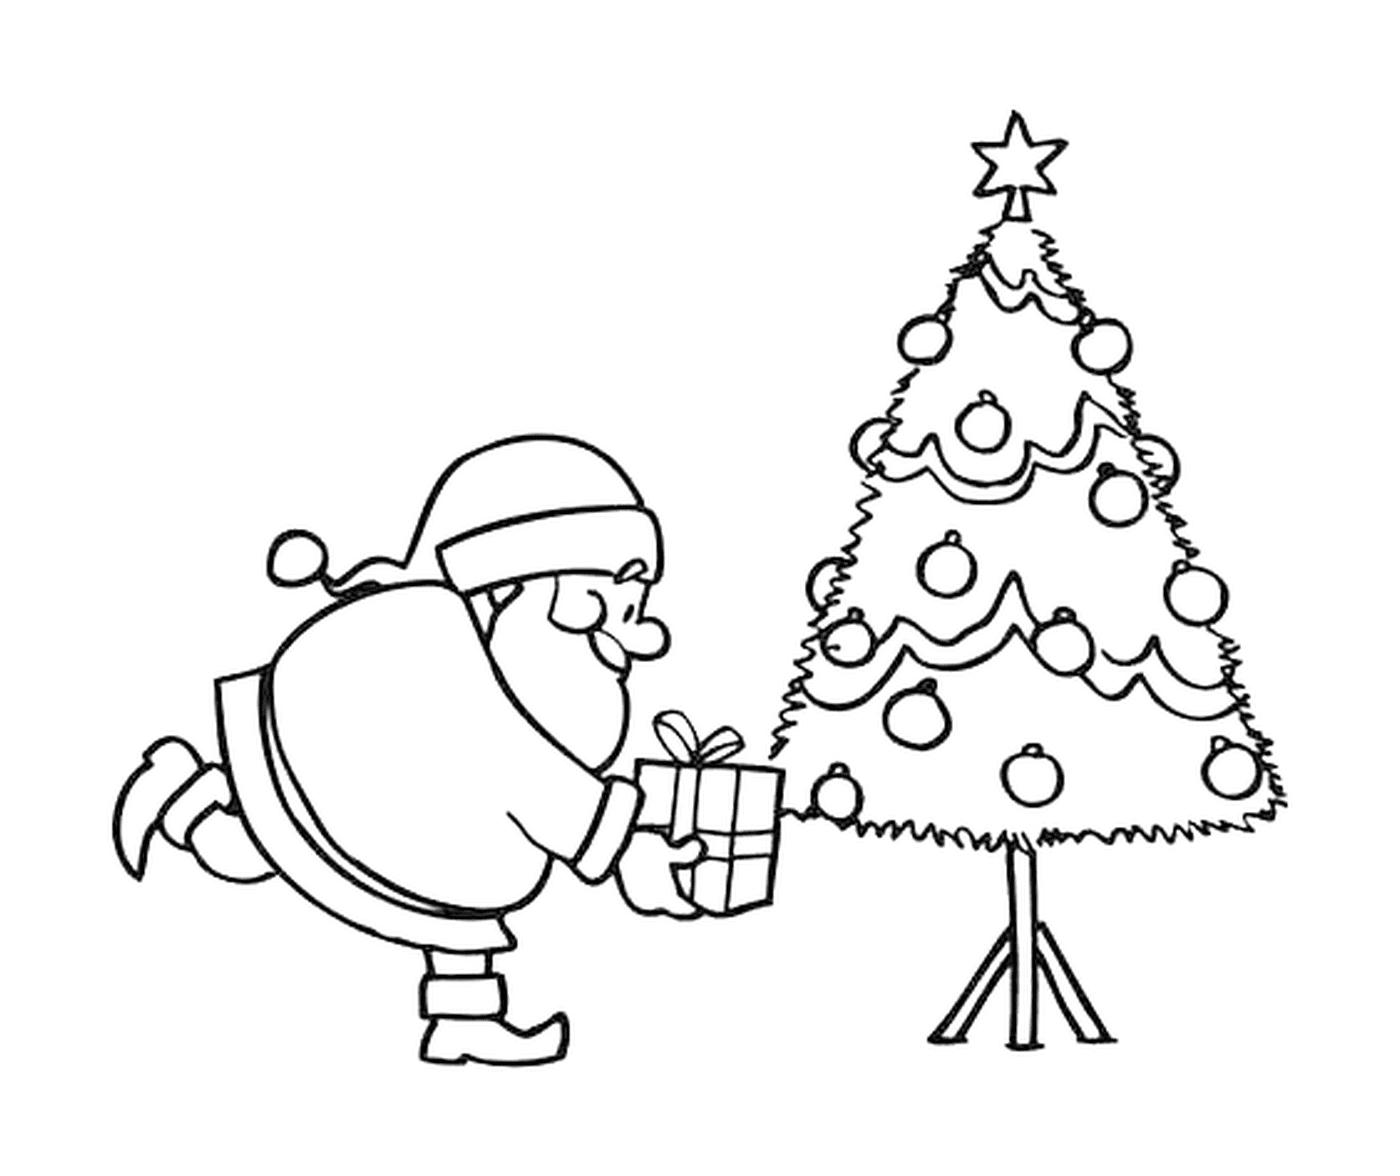  a Santa who puts a present at the foot of the Christmas tree 